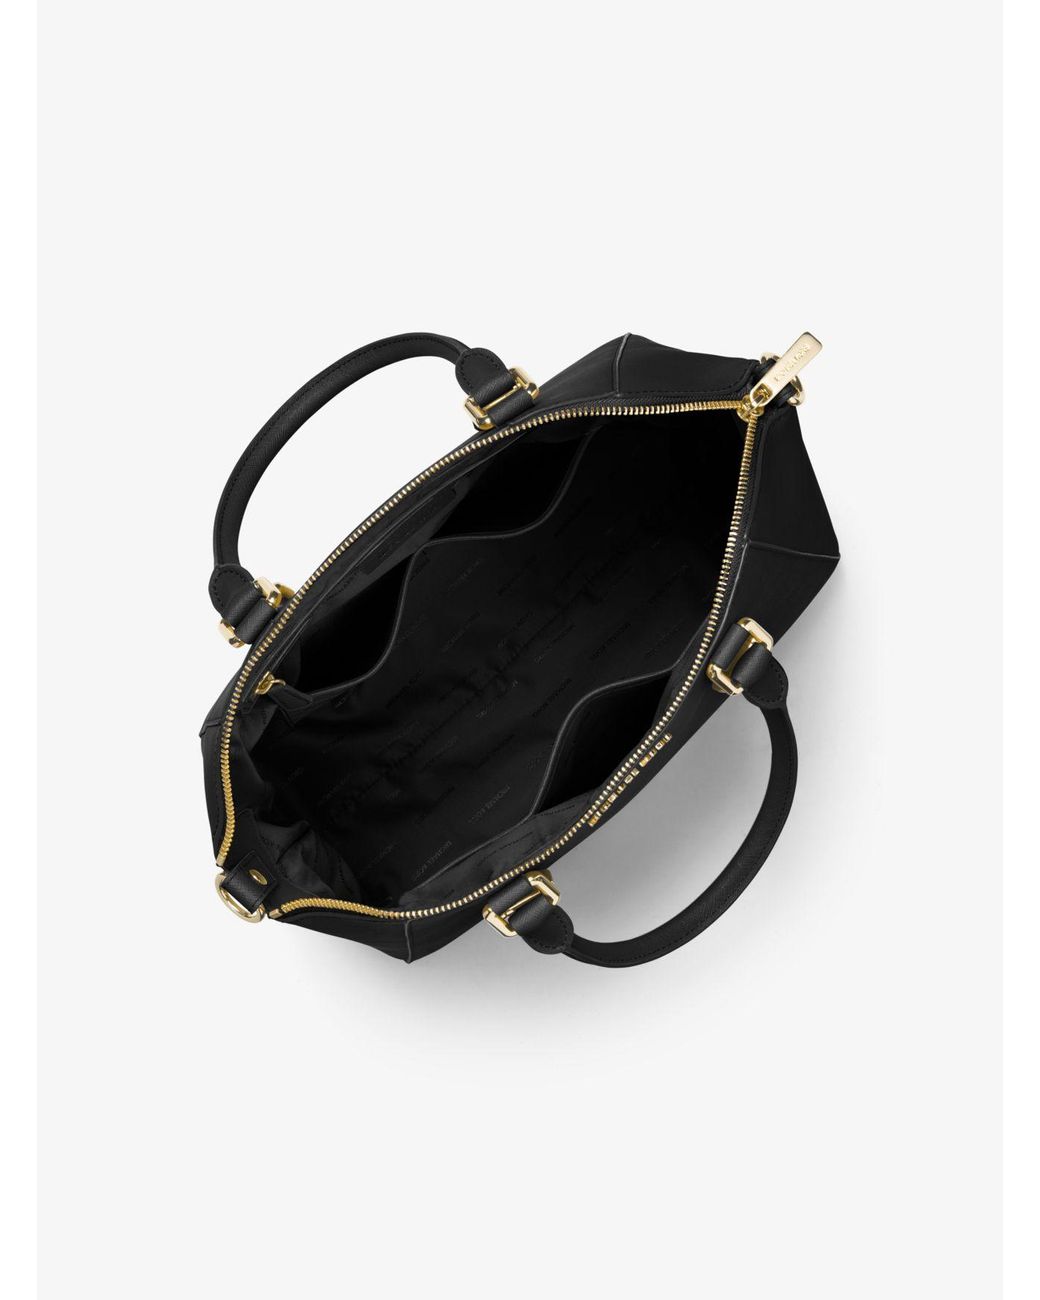 MICHAEL Michael Kors Ciara Large Saffiano Leather Satchel in Black | Lyst